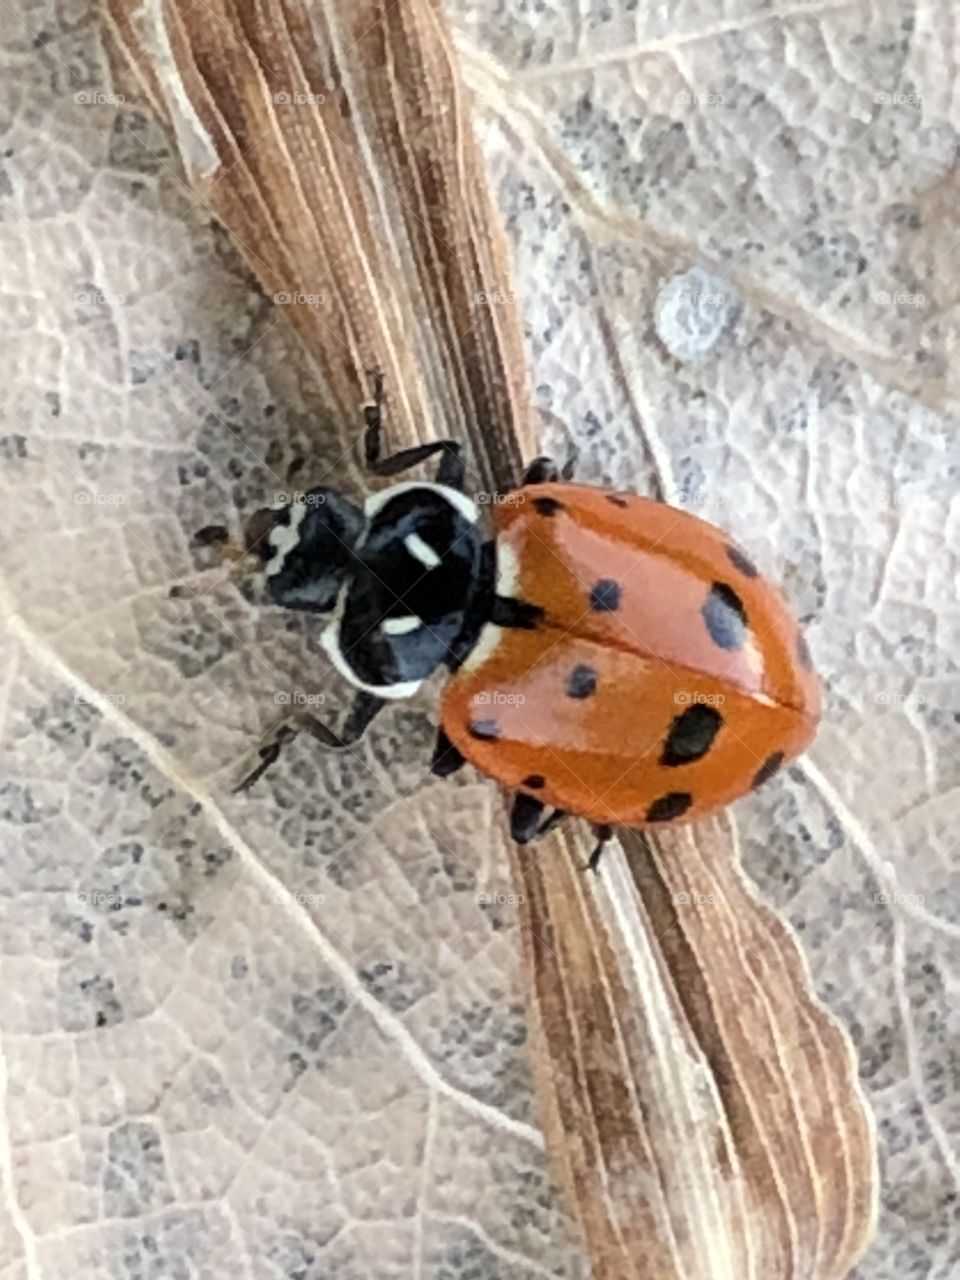 A little lady bug